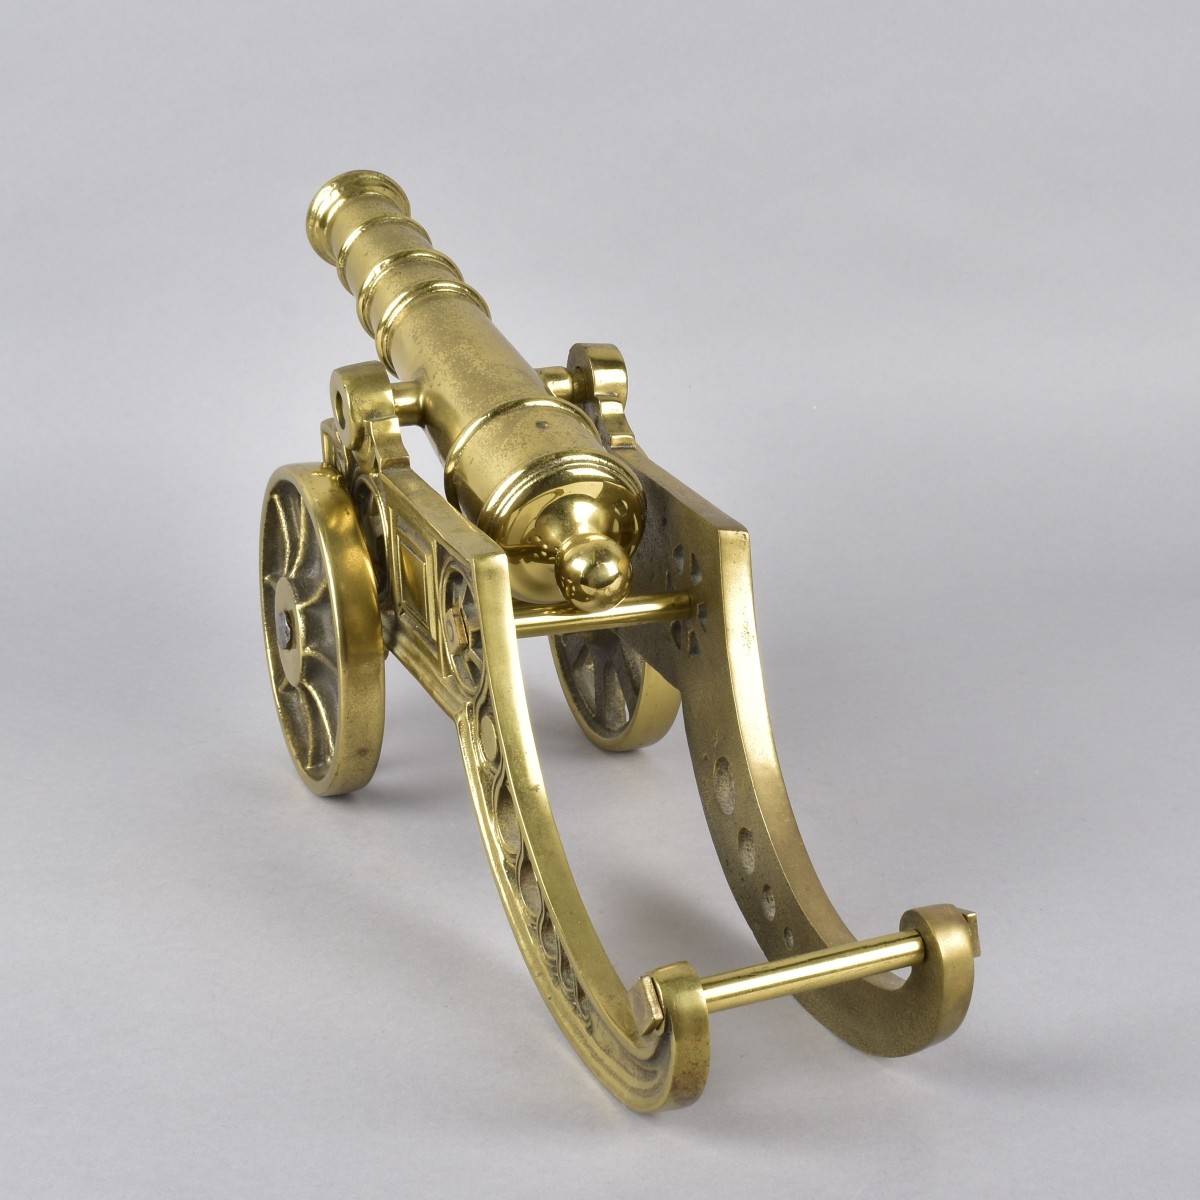 Edwardian Style Brass Cannons